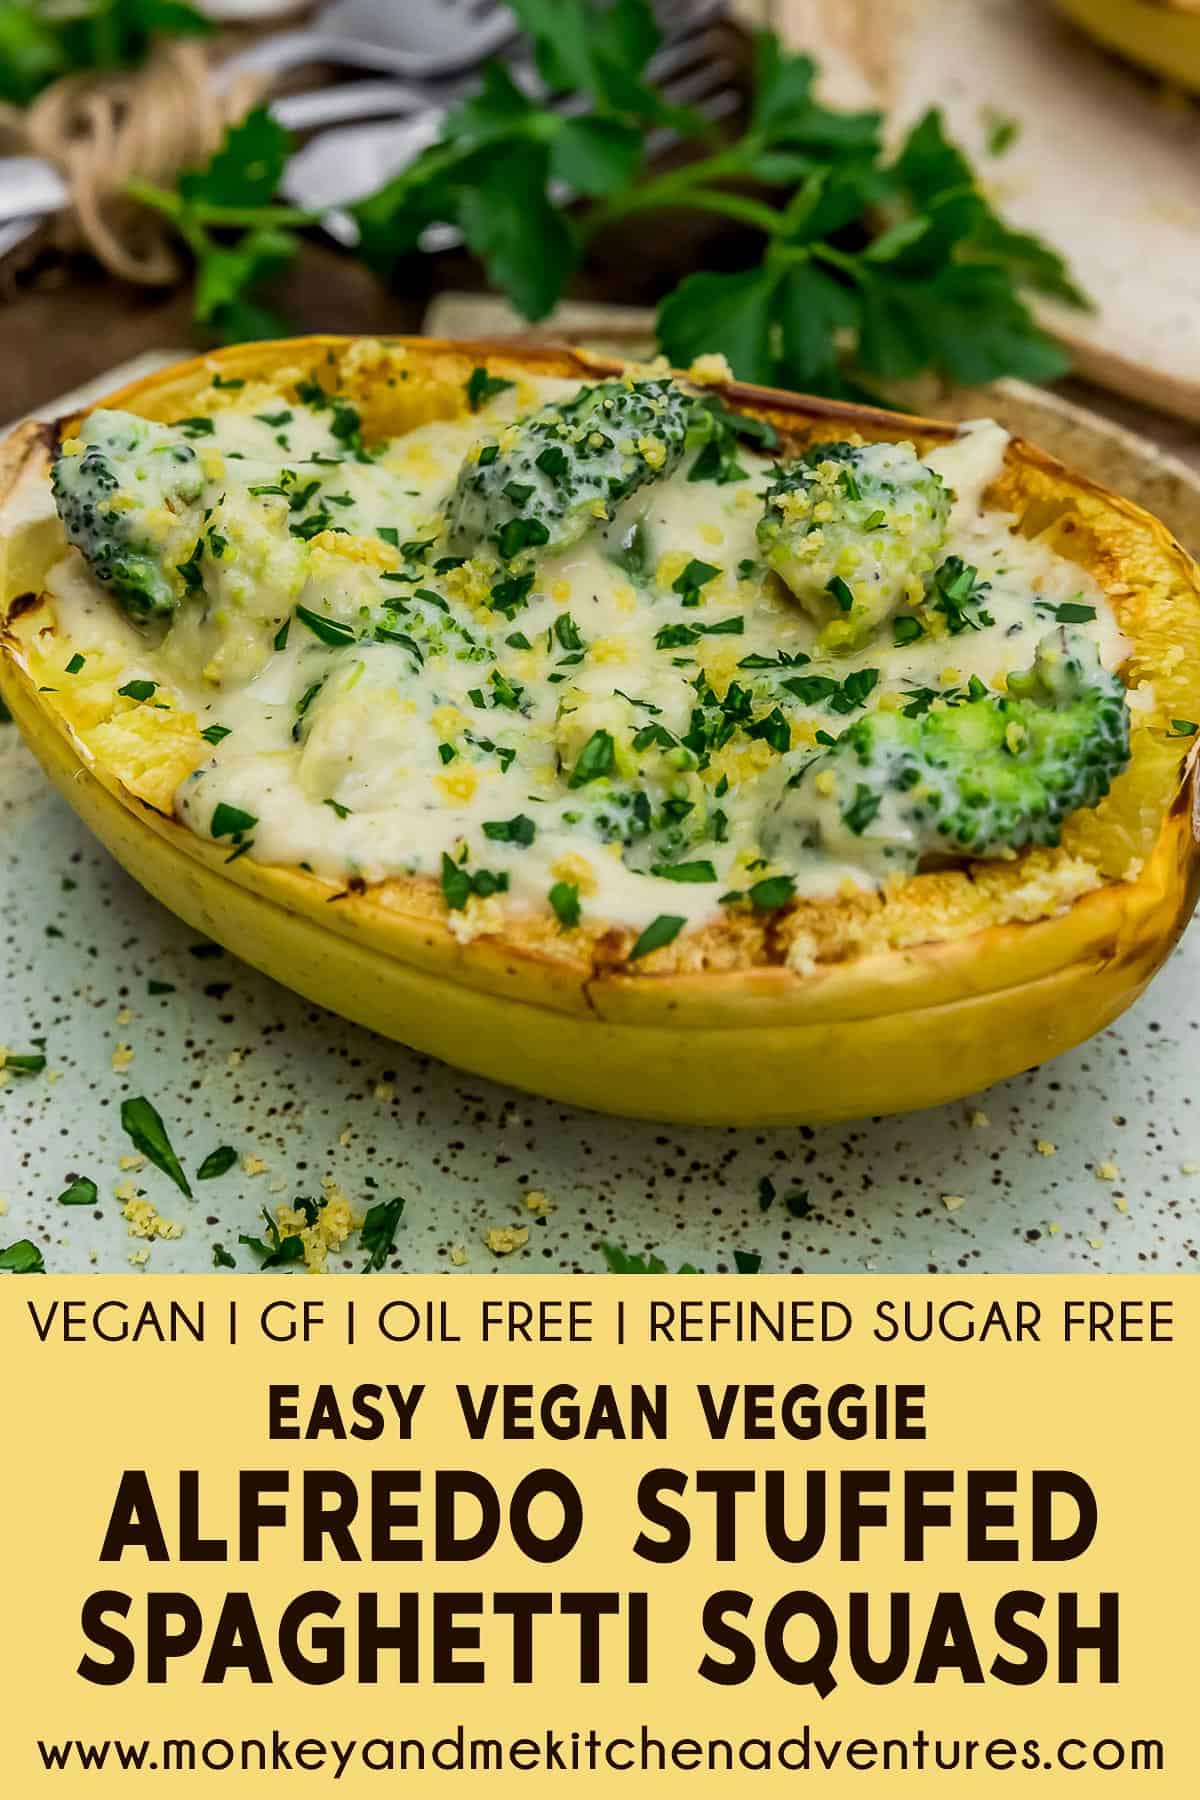 Easy Vegan Veggie Alfredo Stuffed Spaghetti Squash with text description